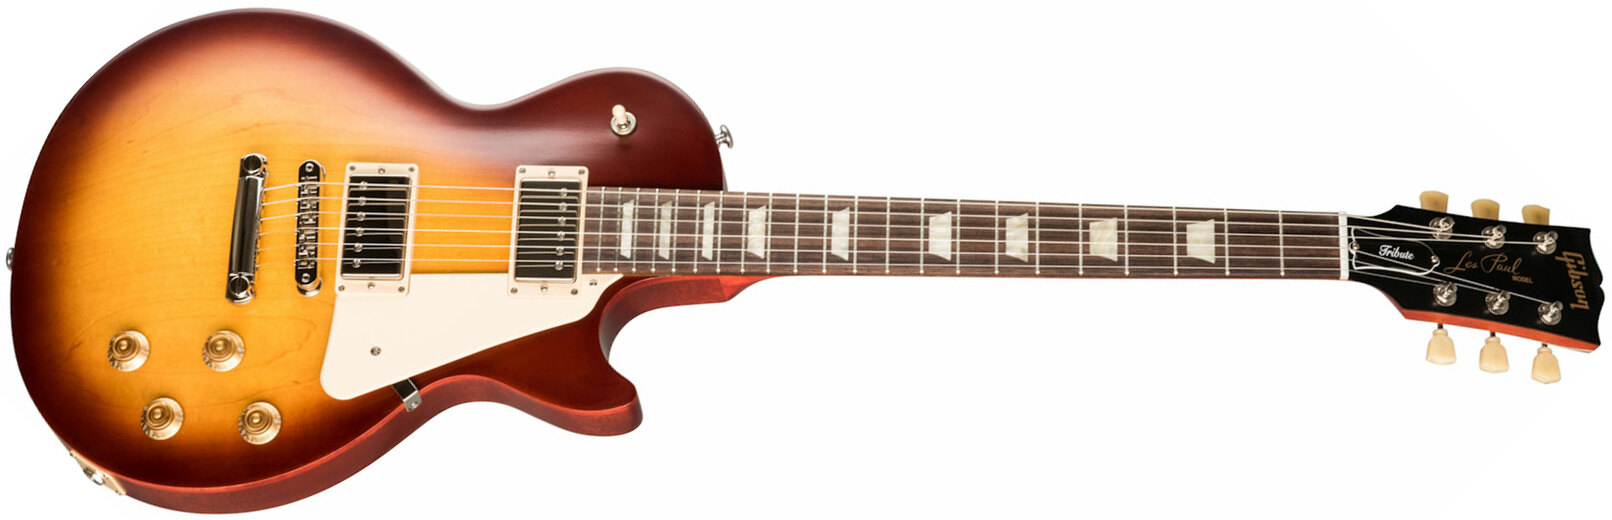 Gibson Les Paul Tribute Modern 2h Ht Rw - Satin Iced Tea - Single cut electric guitar - Main picture